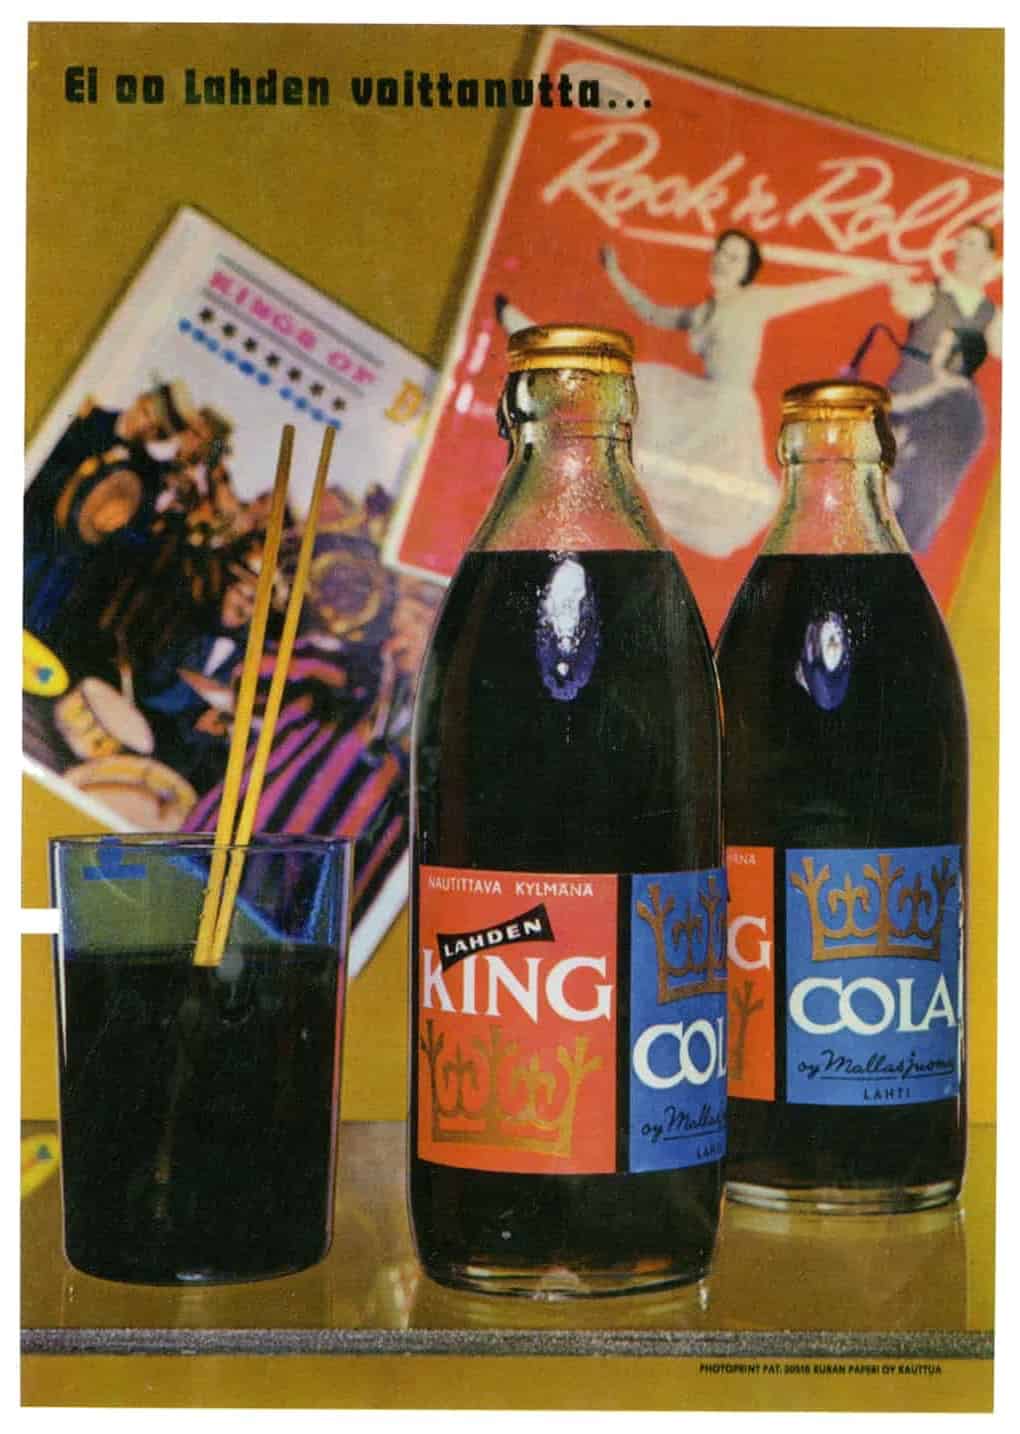 Mallasjuoman King-Cola-juliste